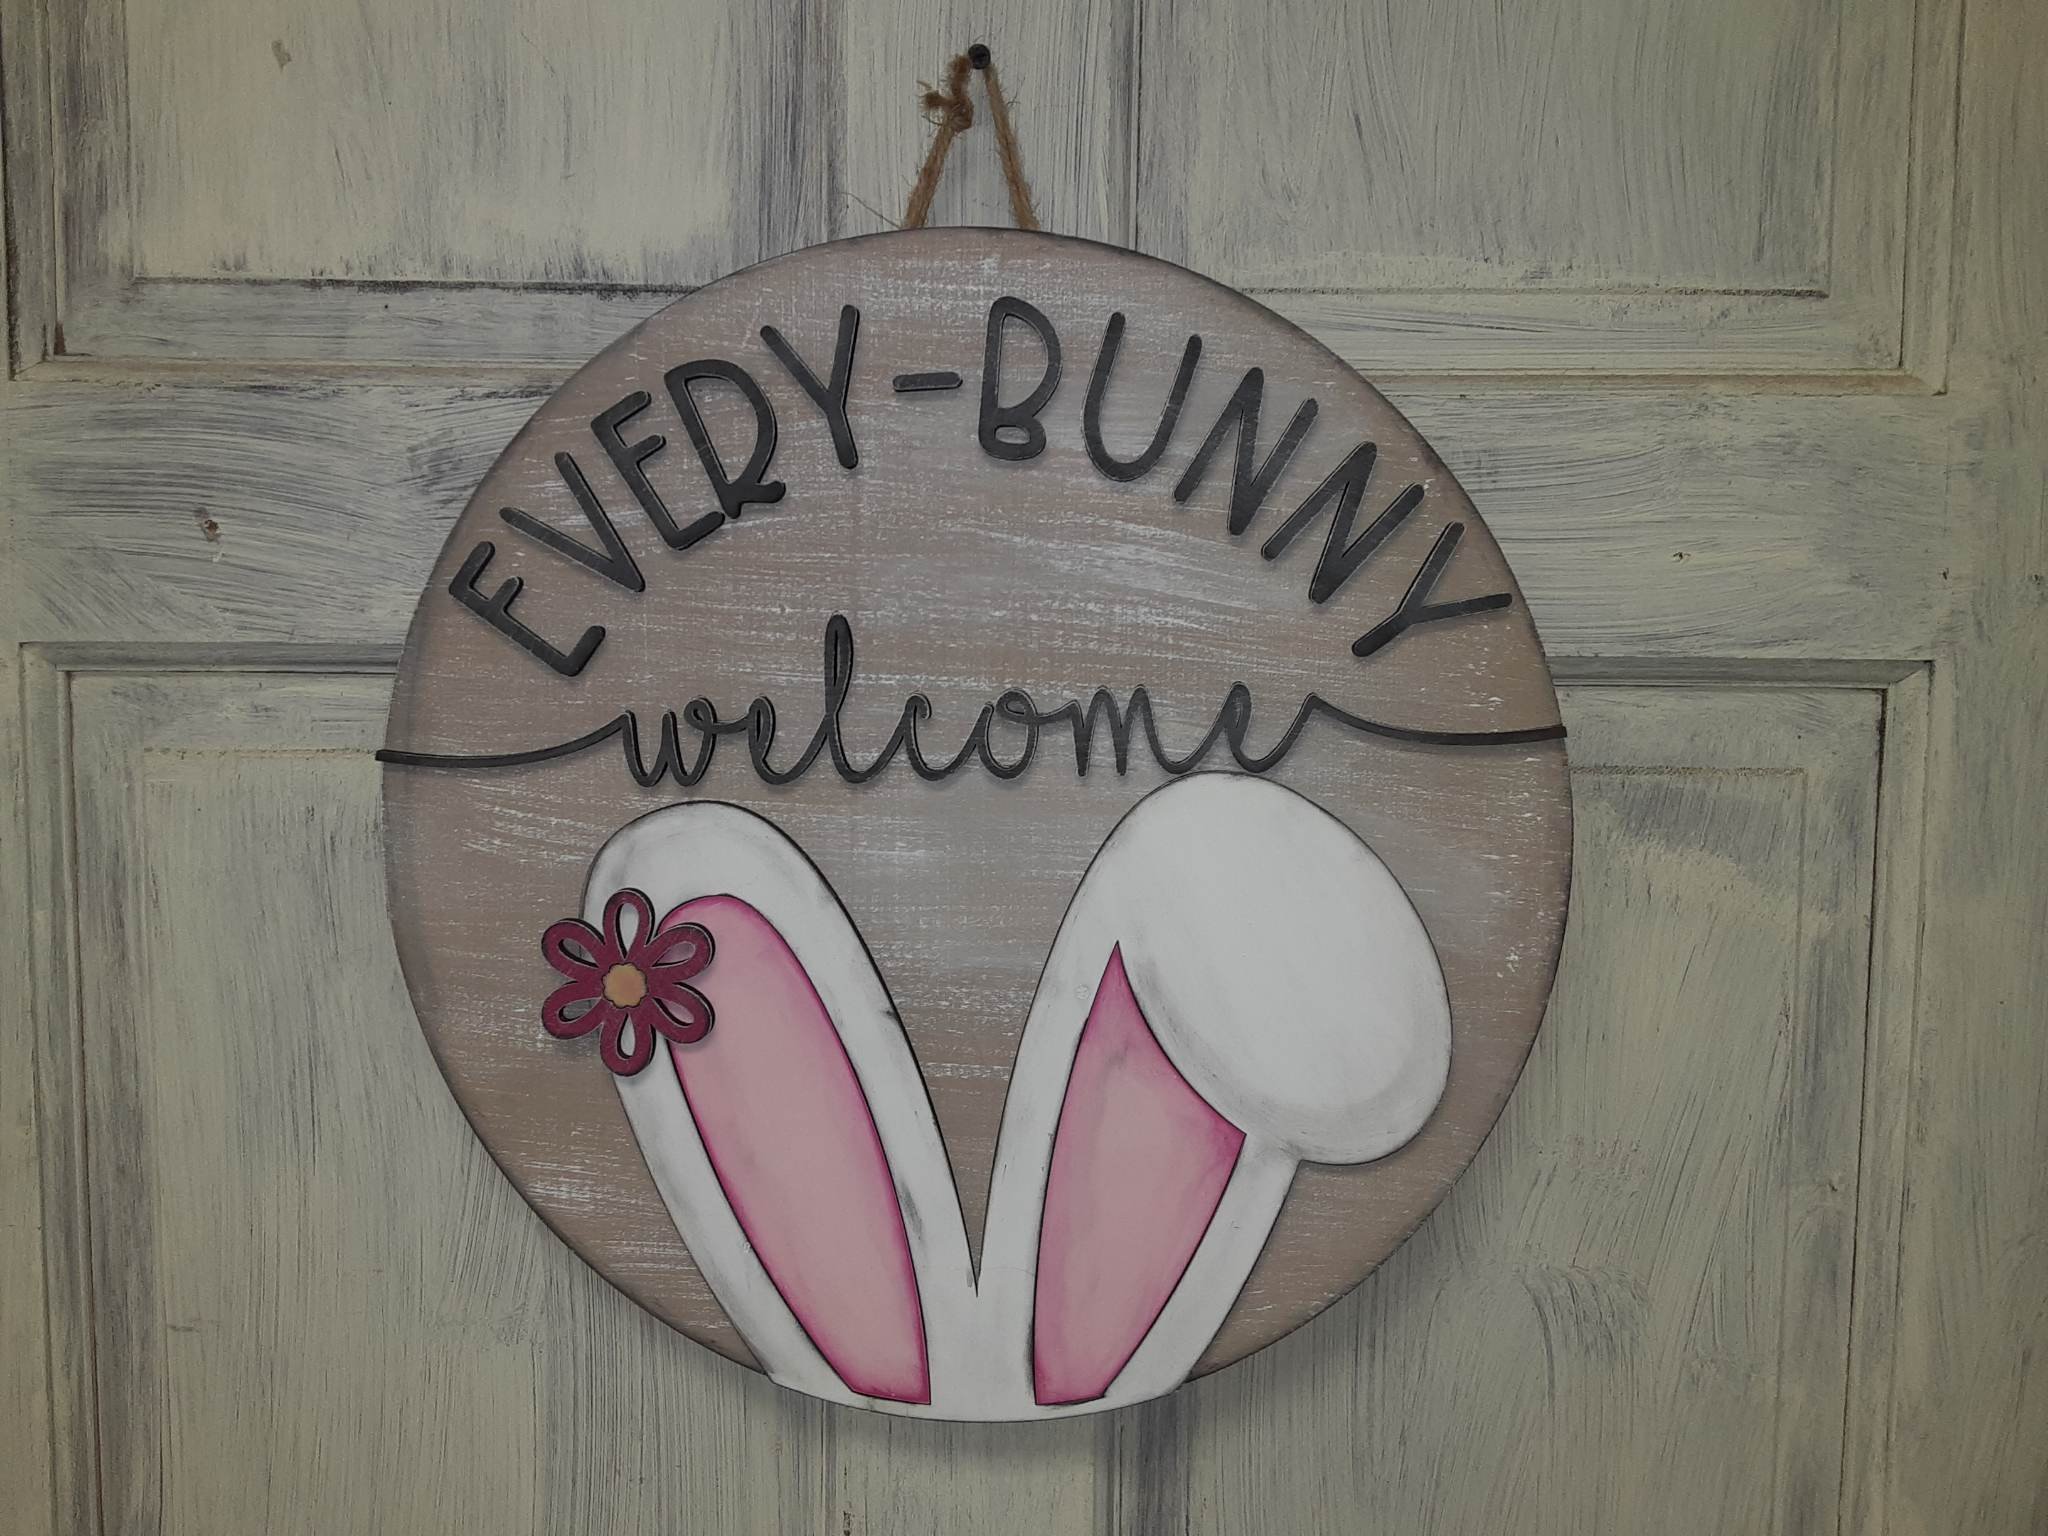 every+bunny+welcome.jpeg